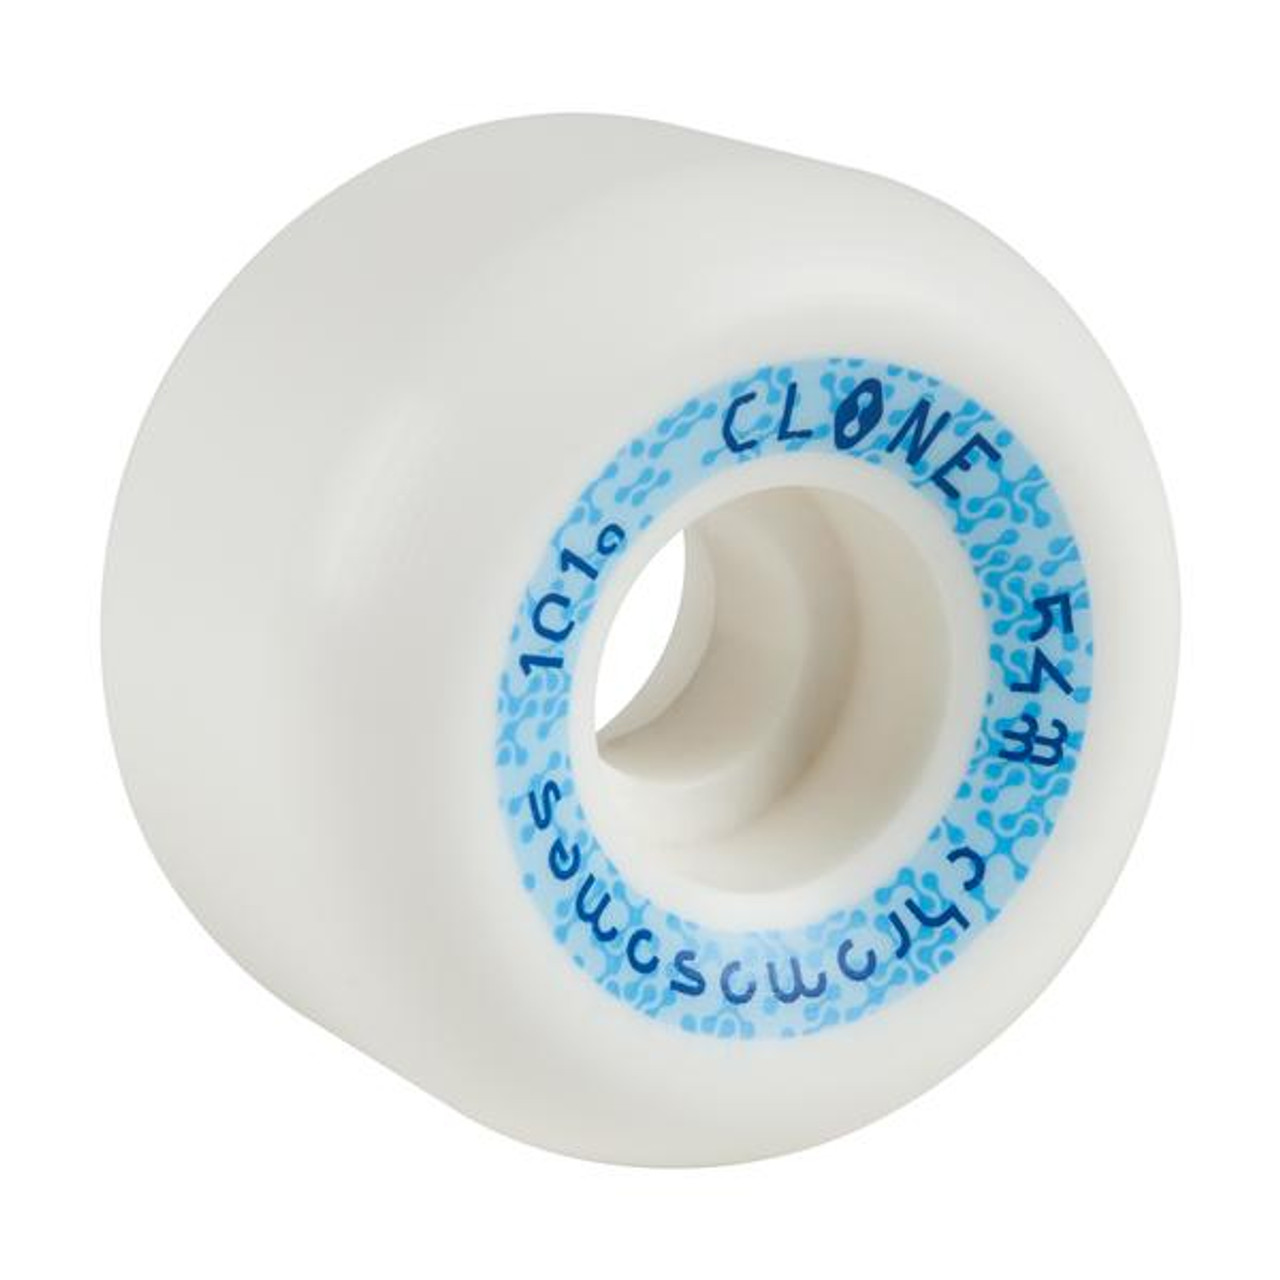 Clone Chromosome Conical Skate Wheels Set White Blue 54mm/101a